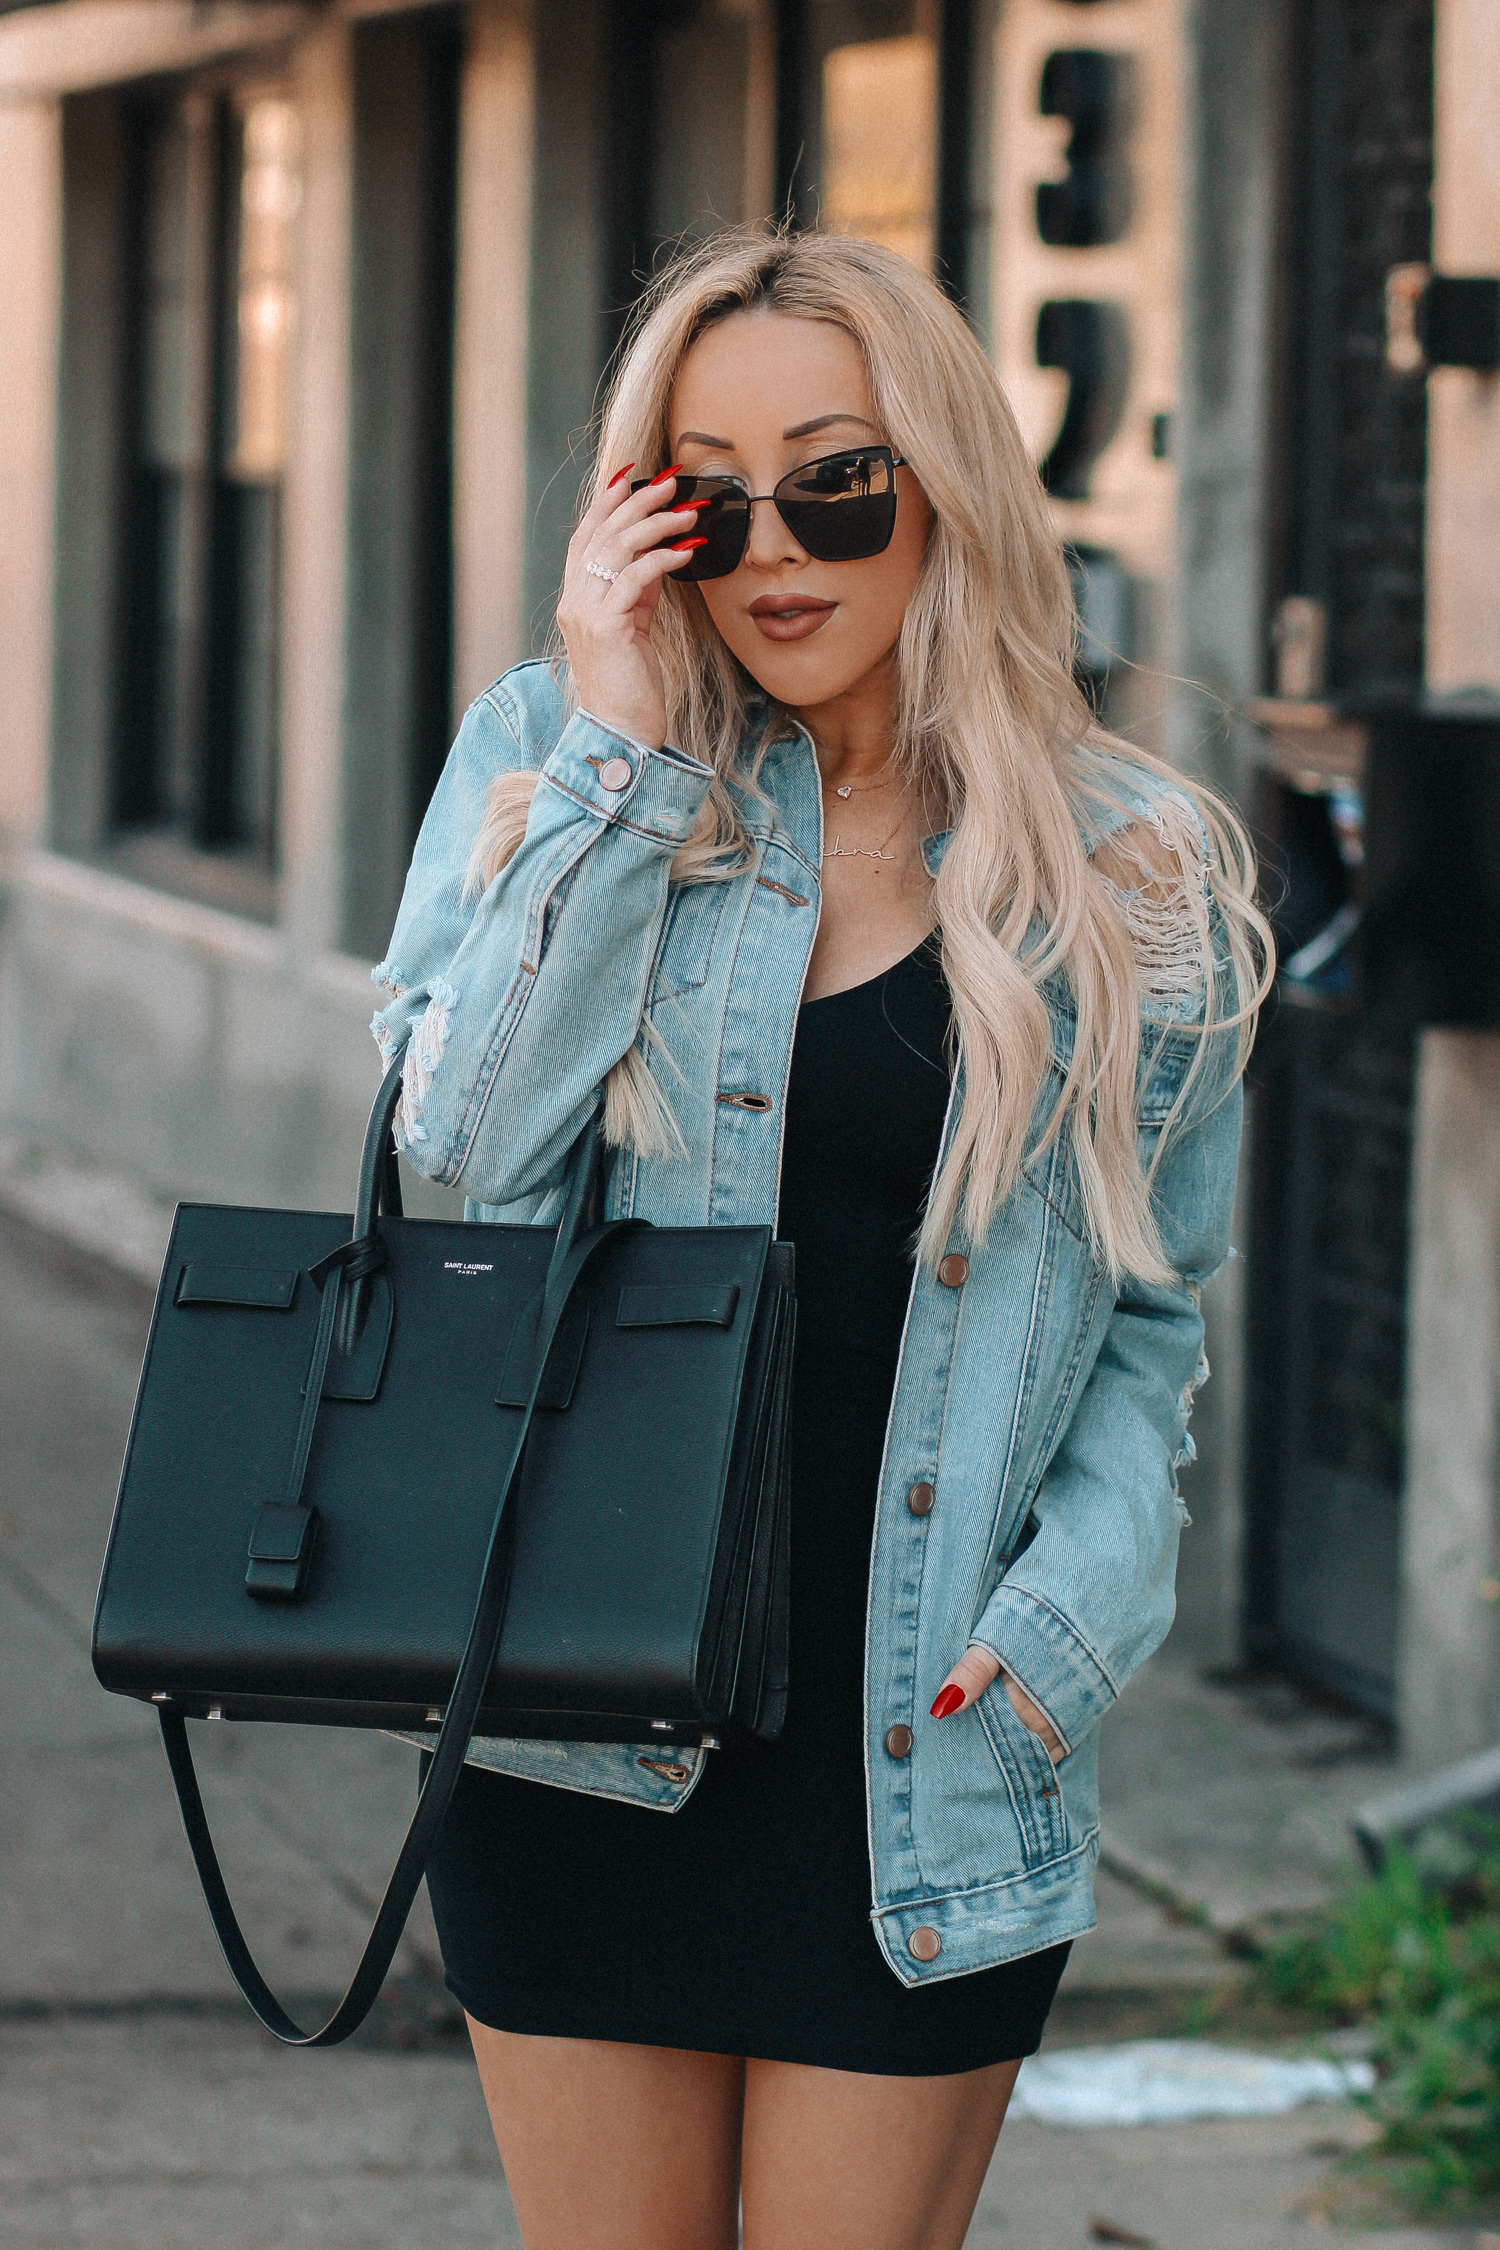 Denim Style | Fashion Blogger Style | Little Black Dress with Denim | Black Saint Laurent Bag | Blondie in the City by Hayley Larue